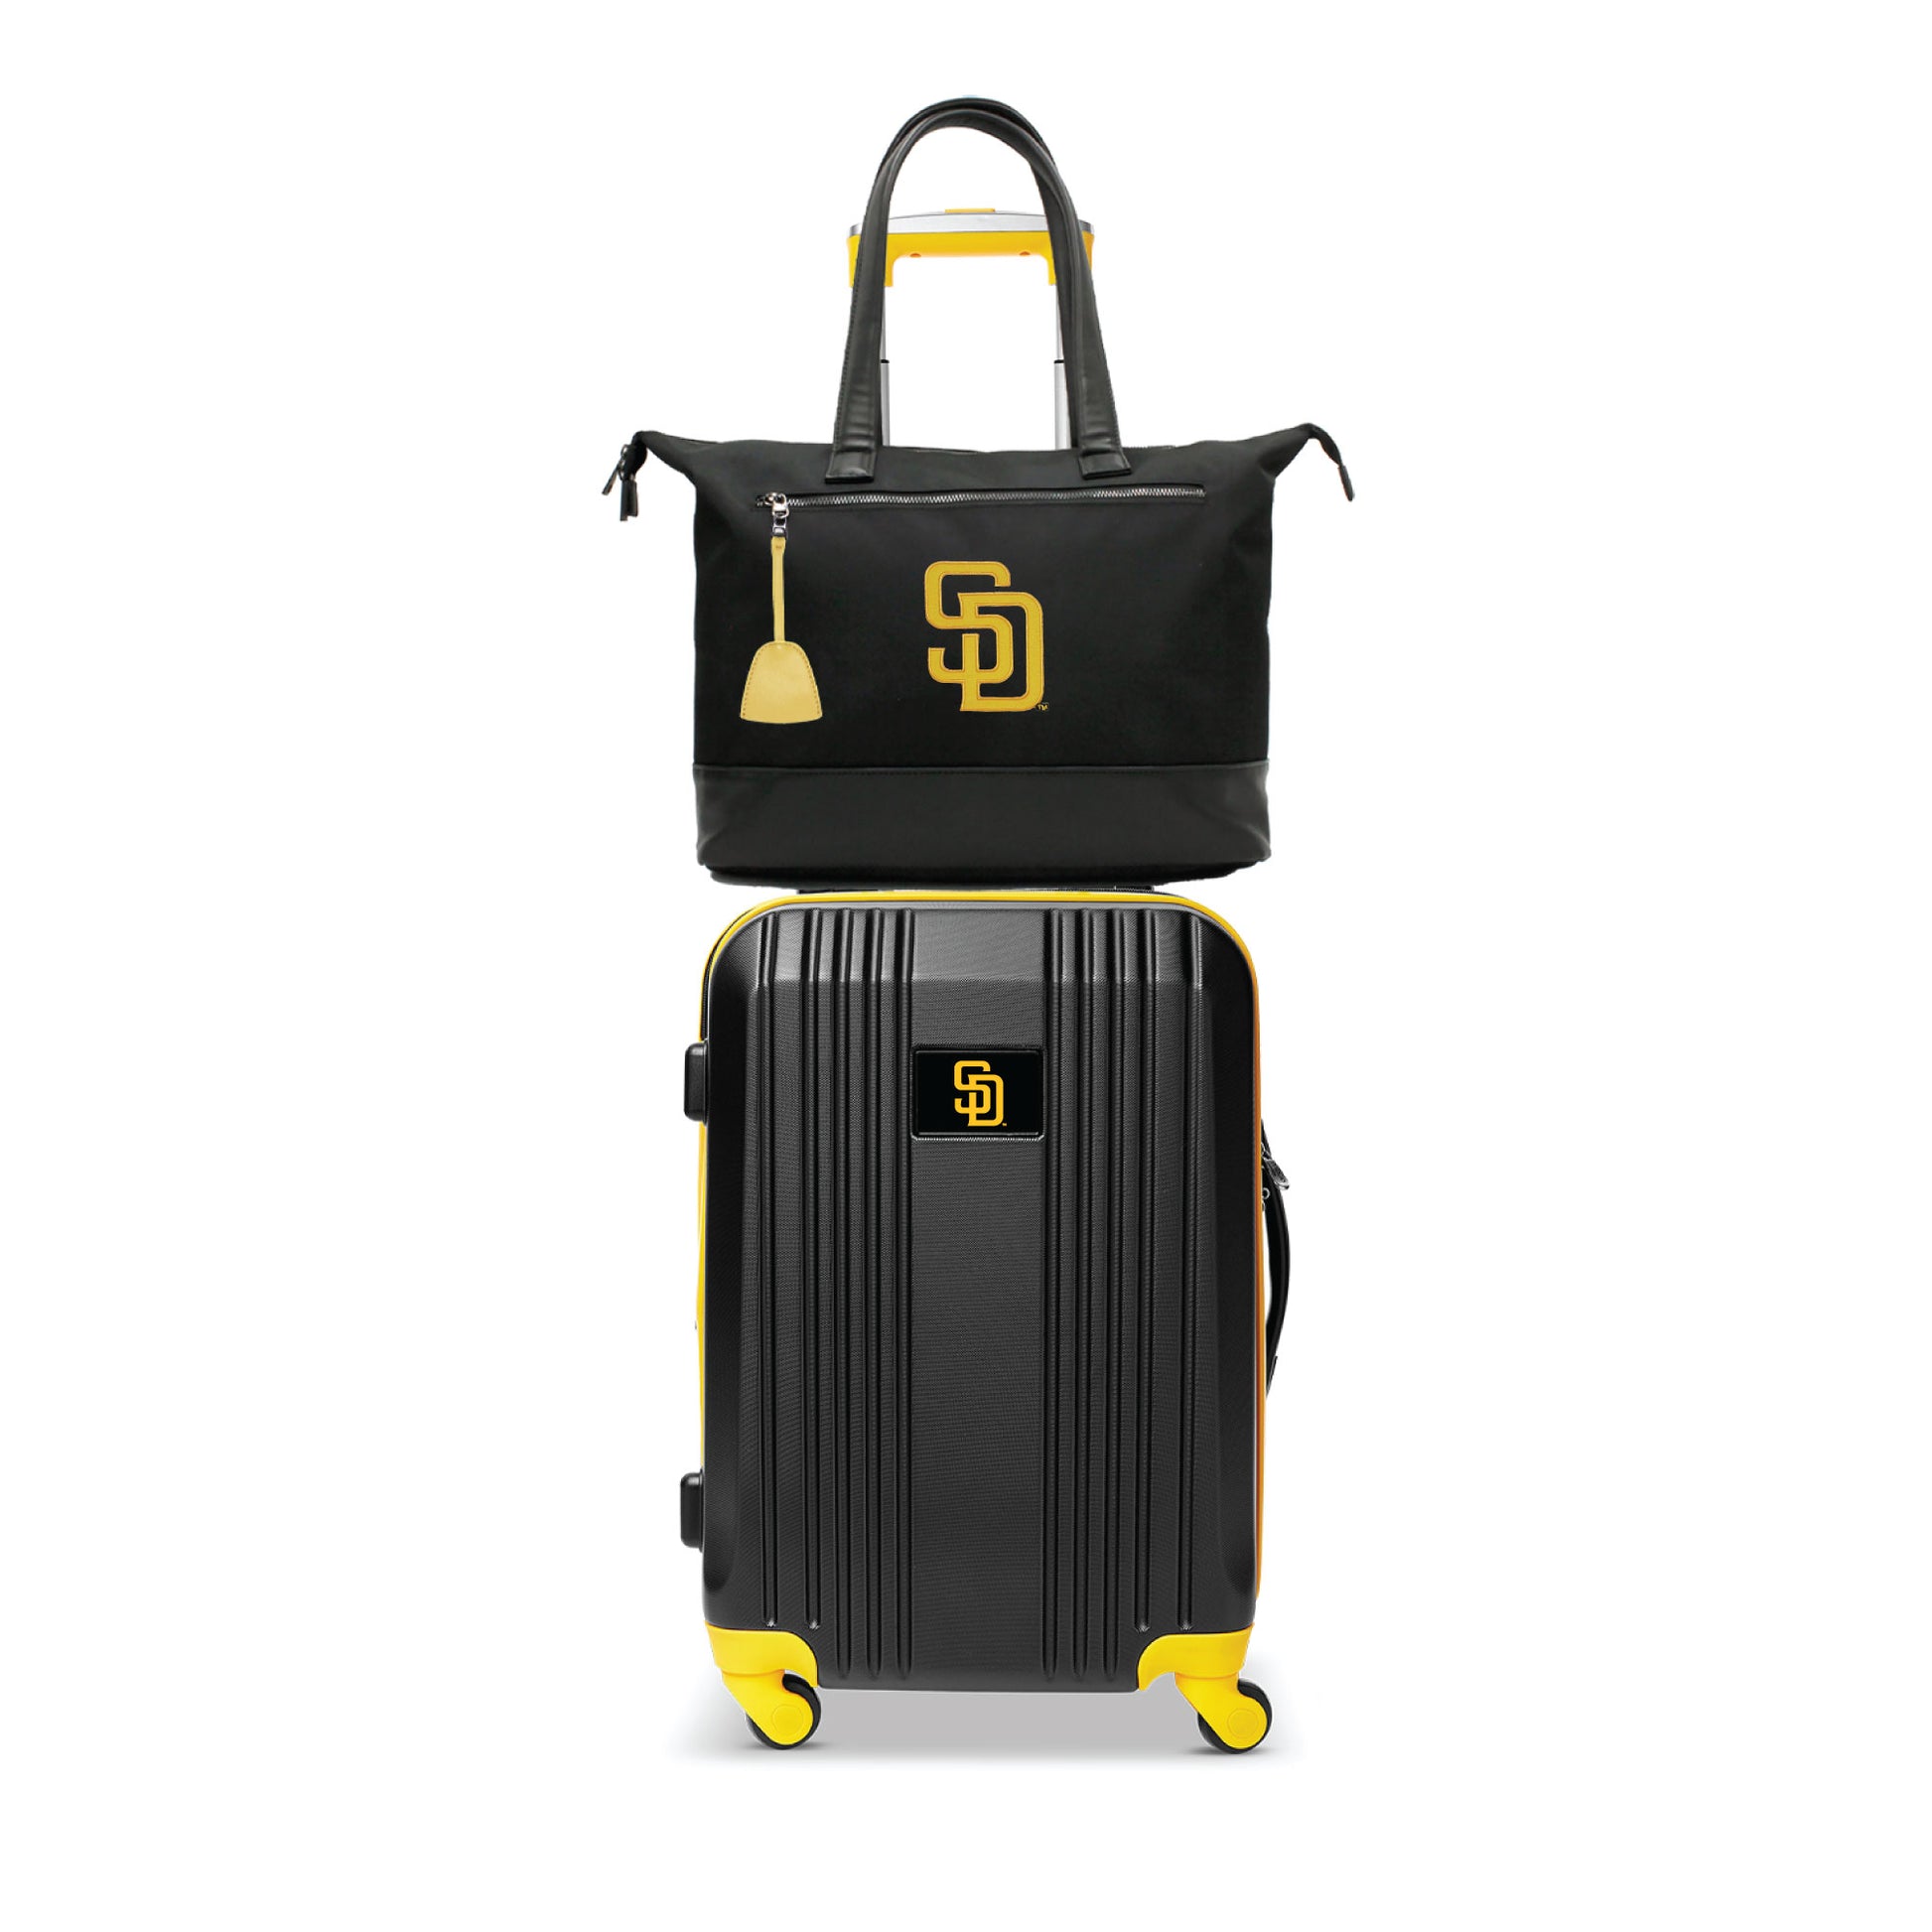 San Diego Padres Premium Laptop Tote Bag and Luggage Set